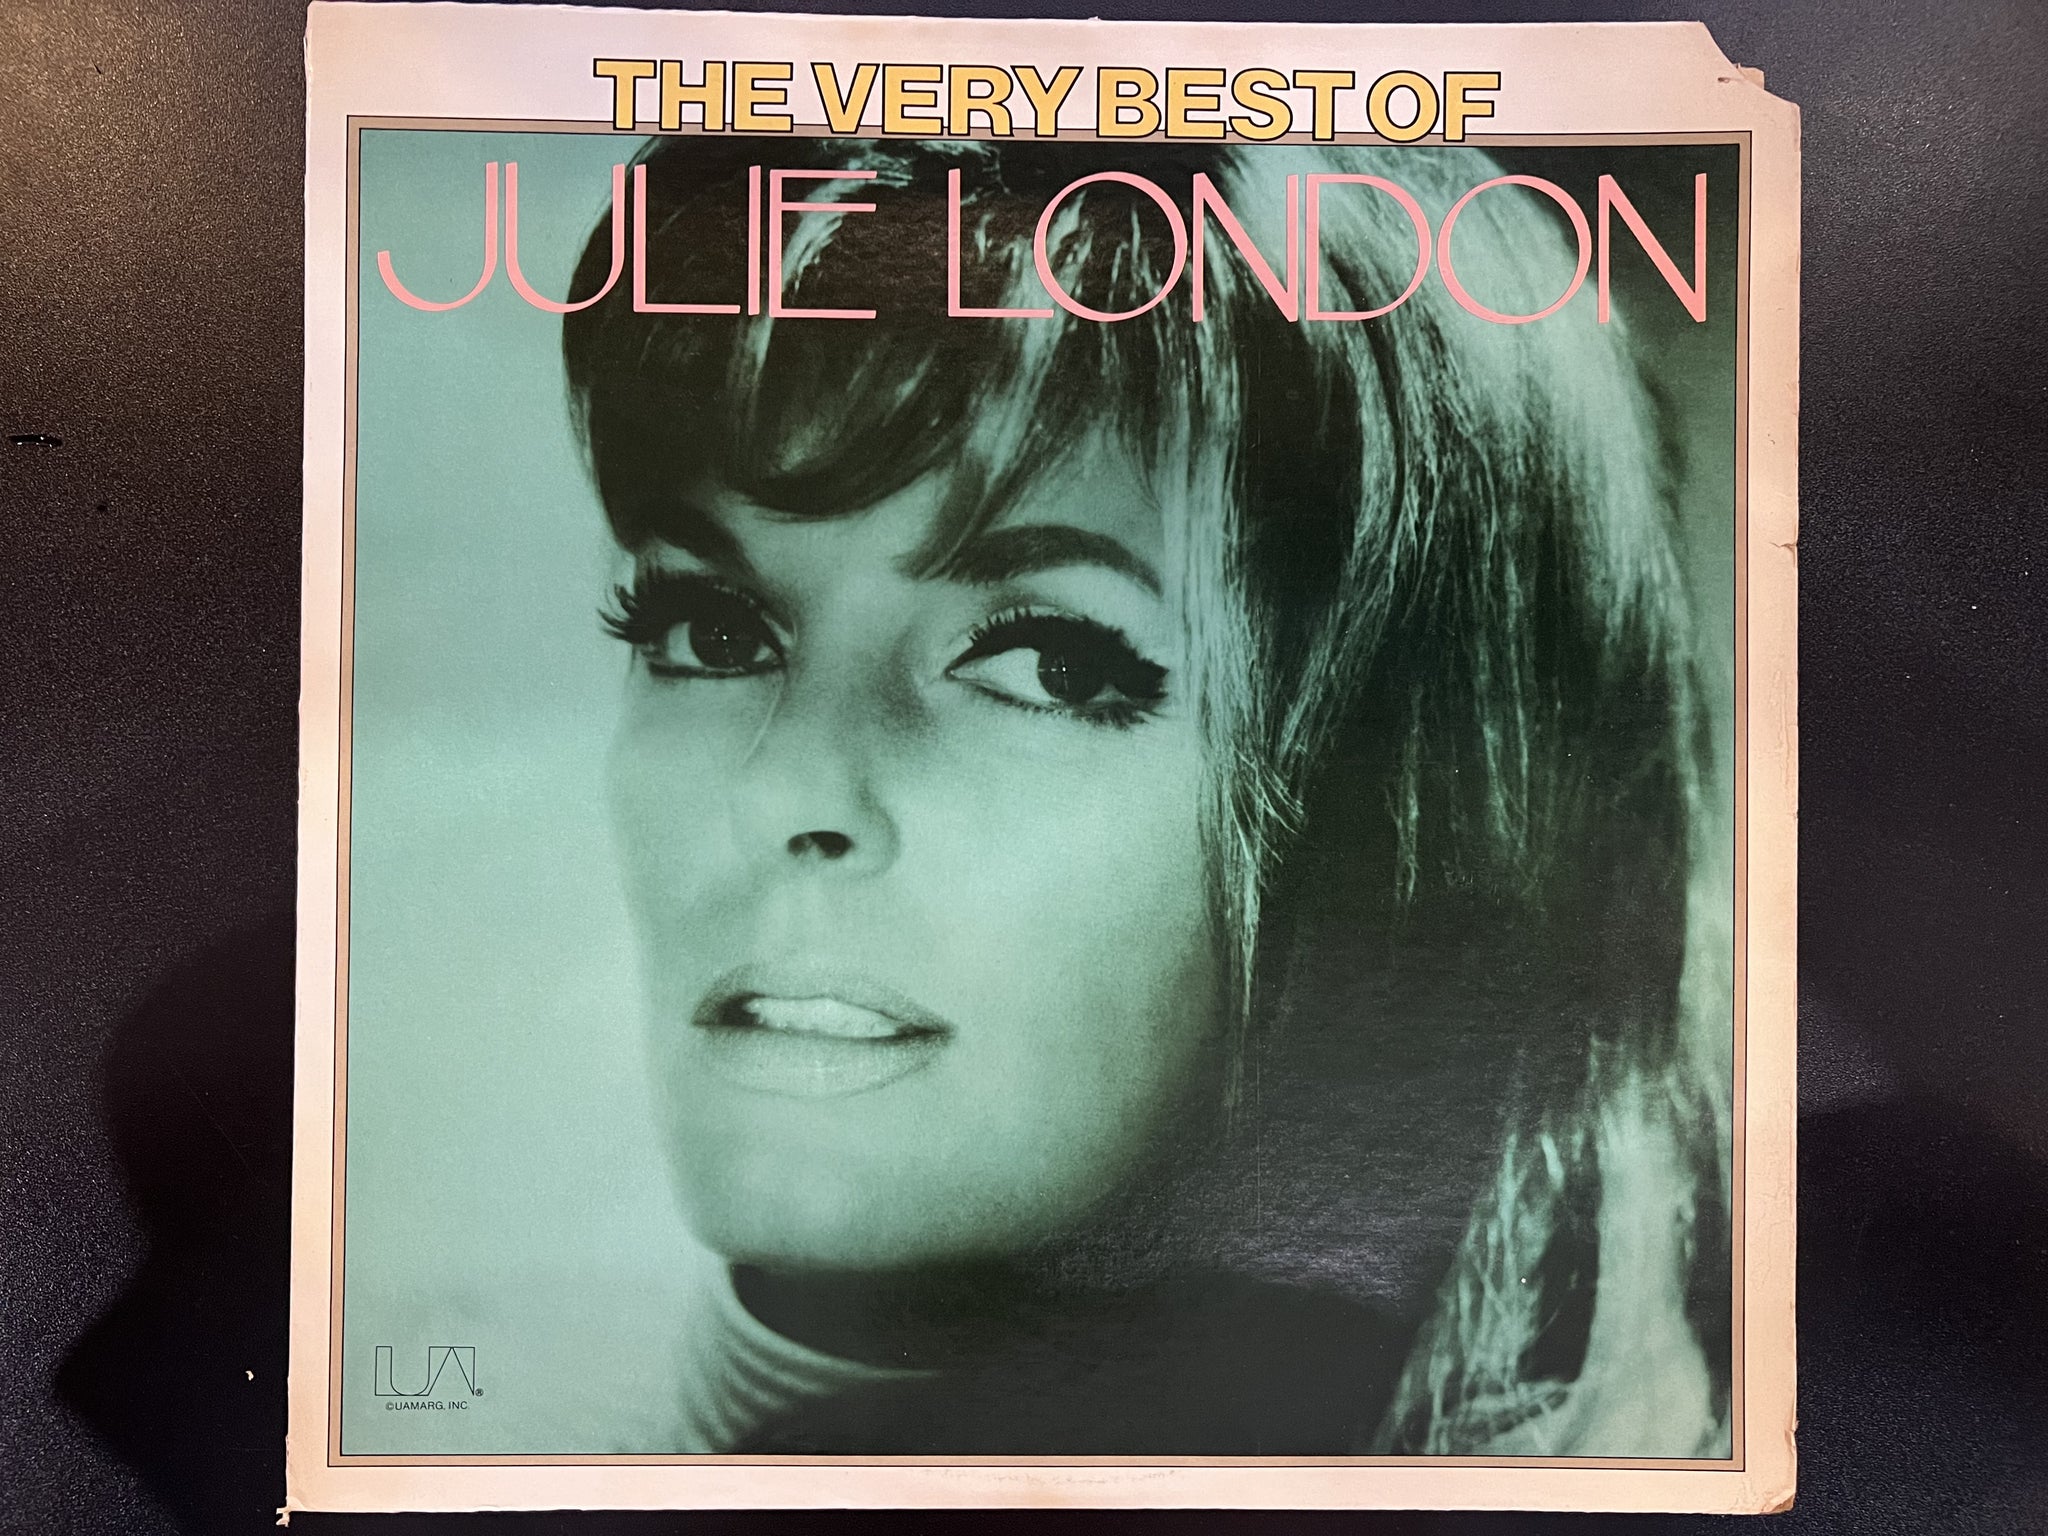 Julie London – The Very Best Of Julie London - VG+ LP Record 1975 United Artists USA Vinyl - Jazz / Easy Listening / Vocal